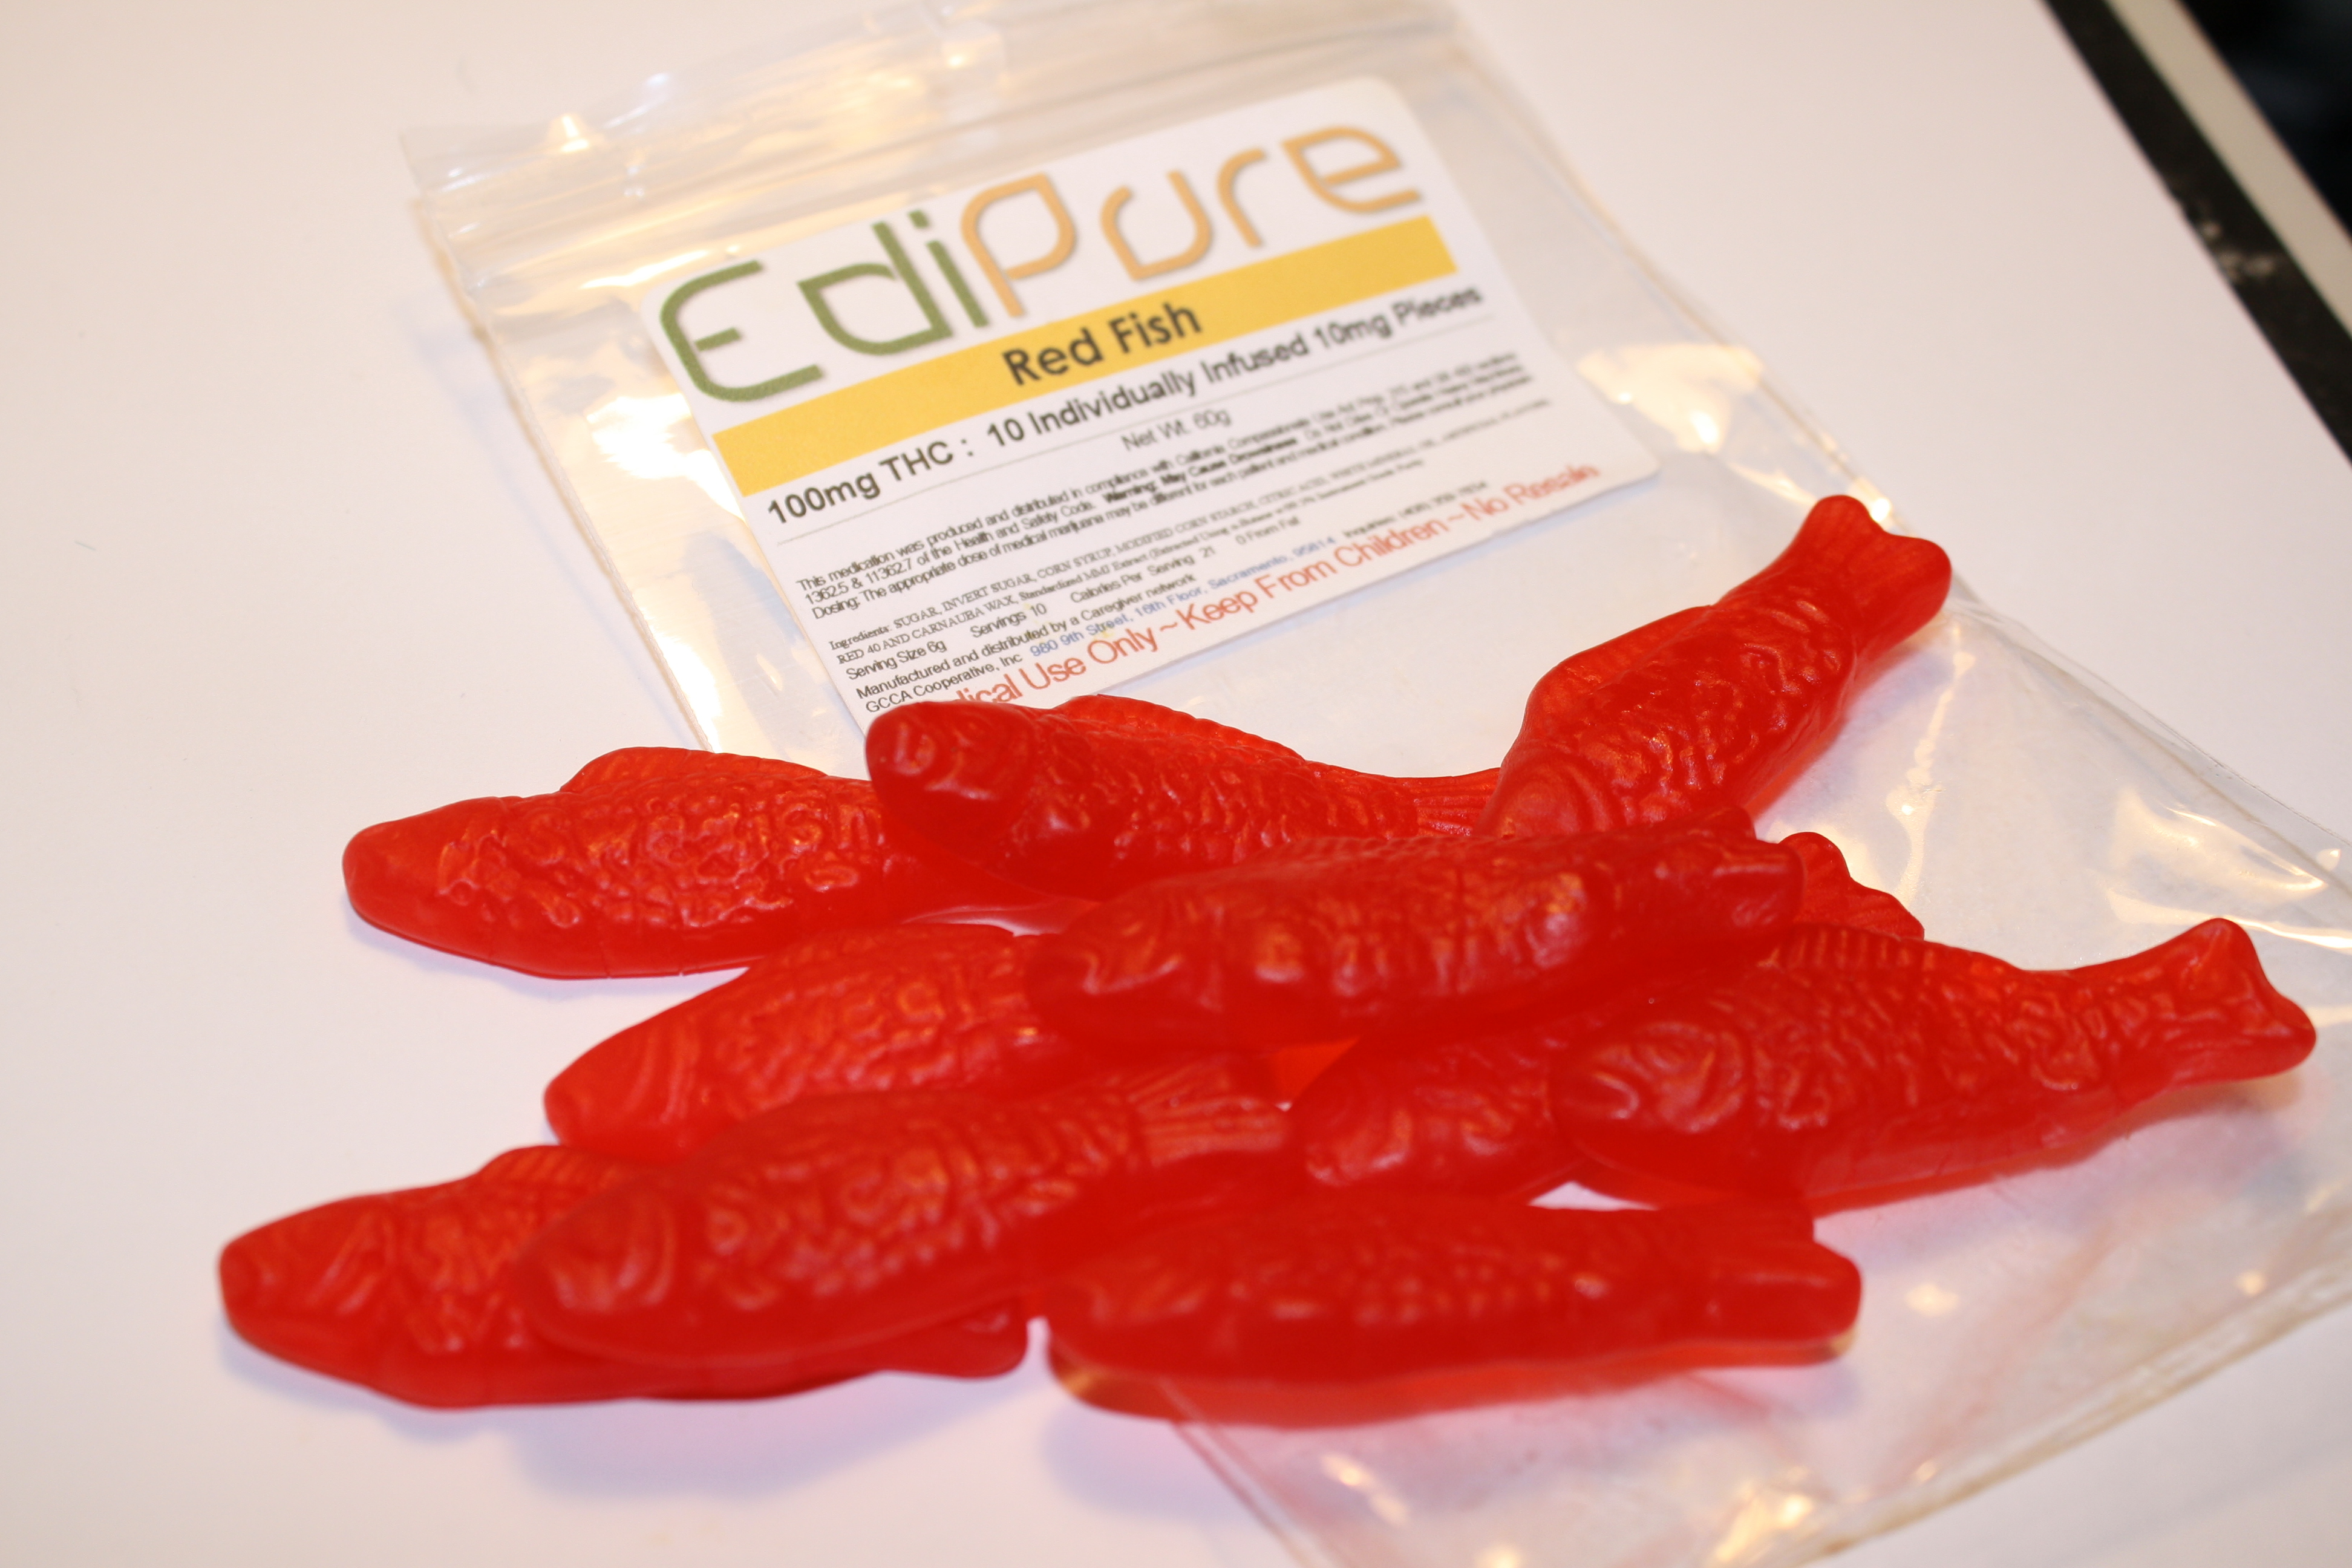 Edipure Red Fish Edible Review